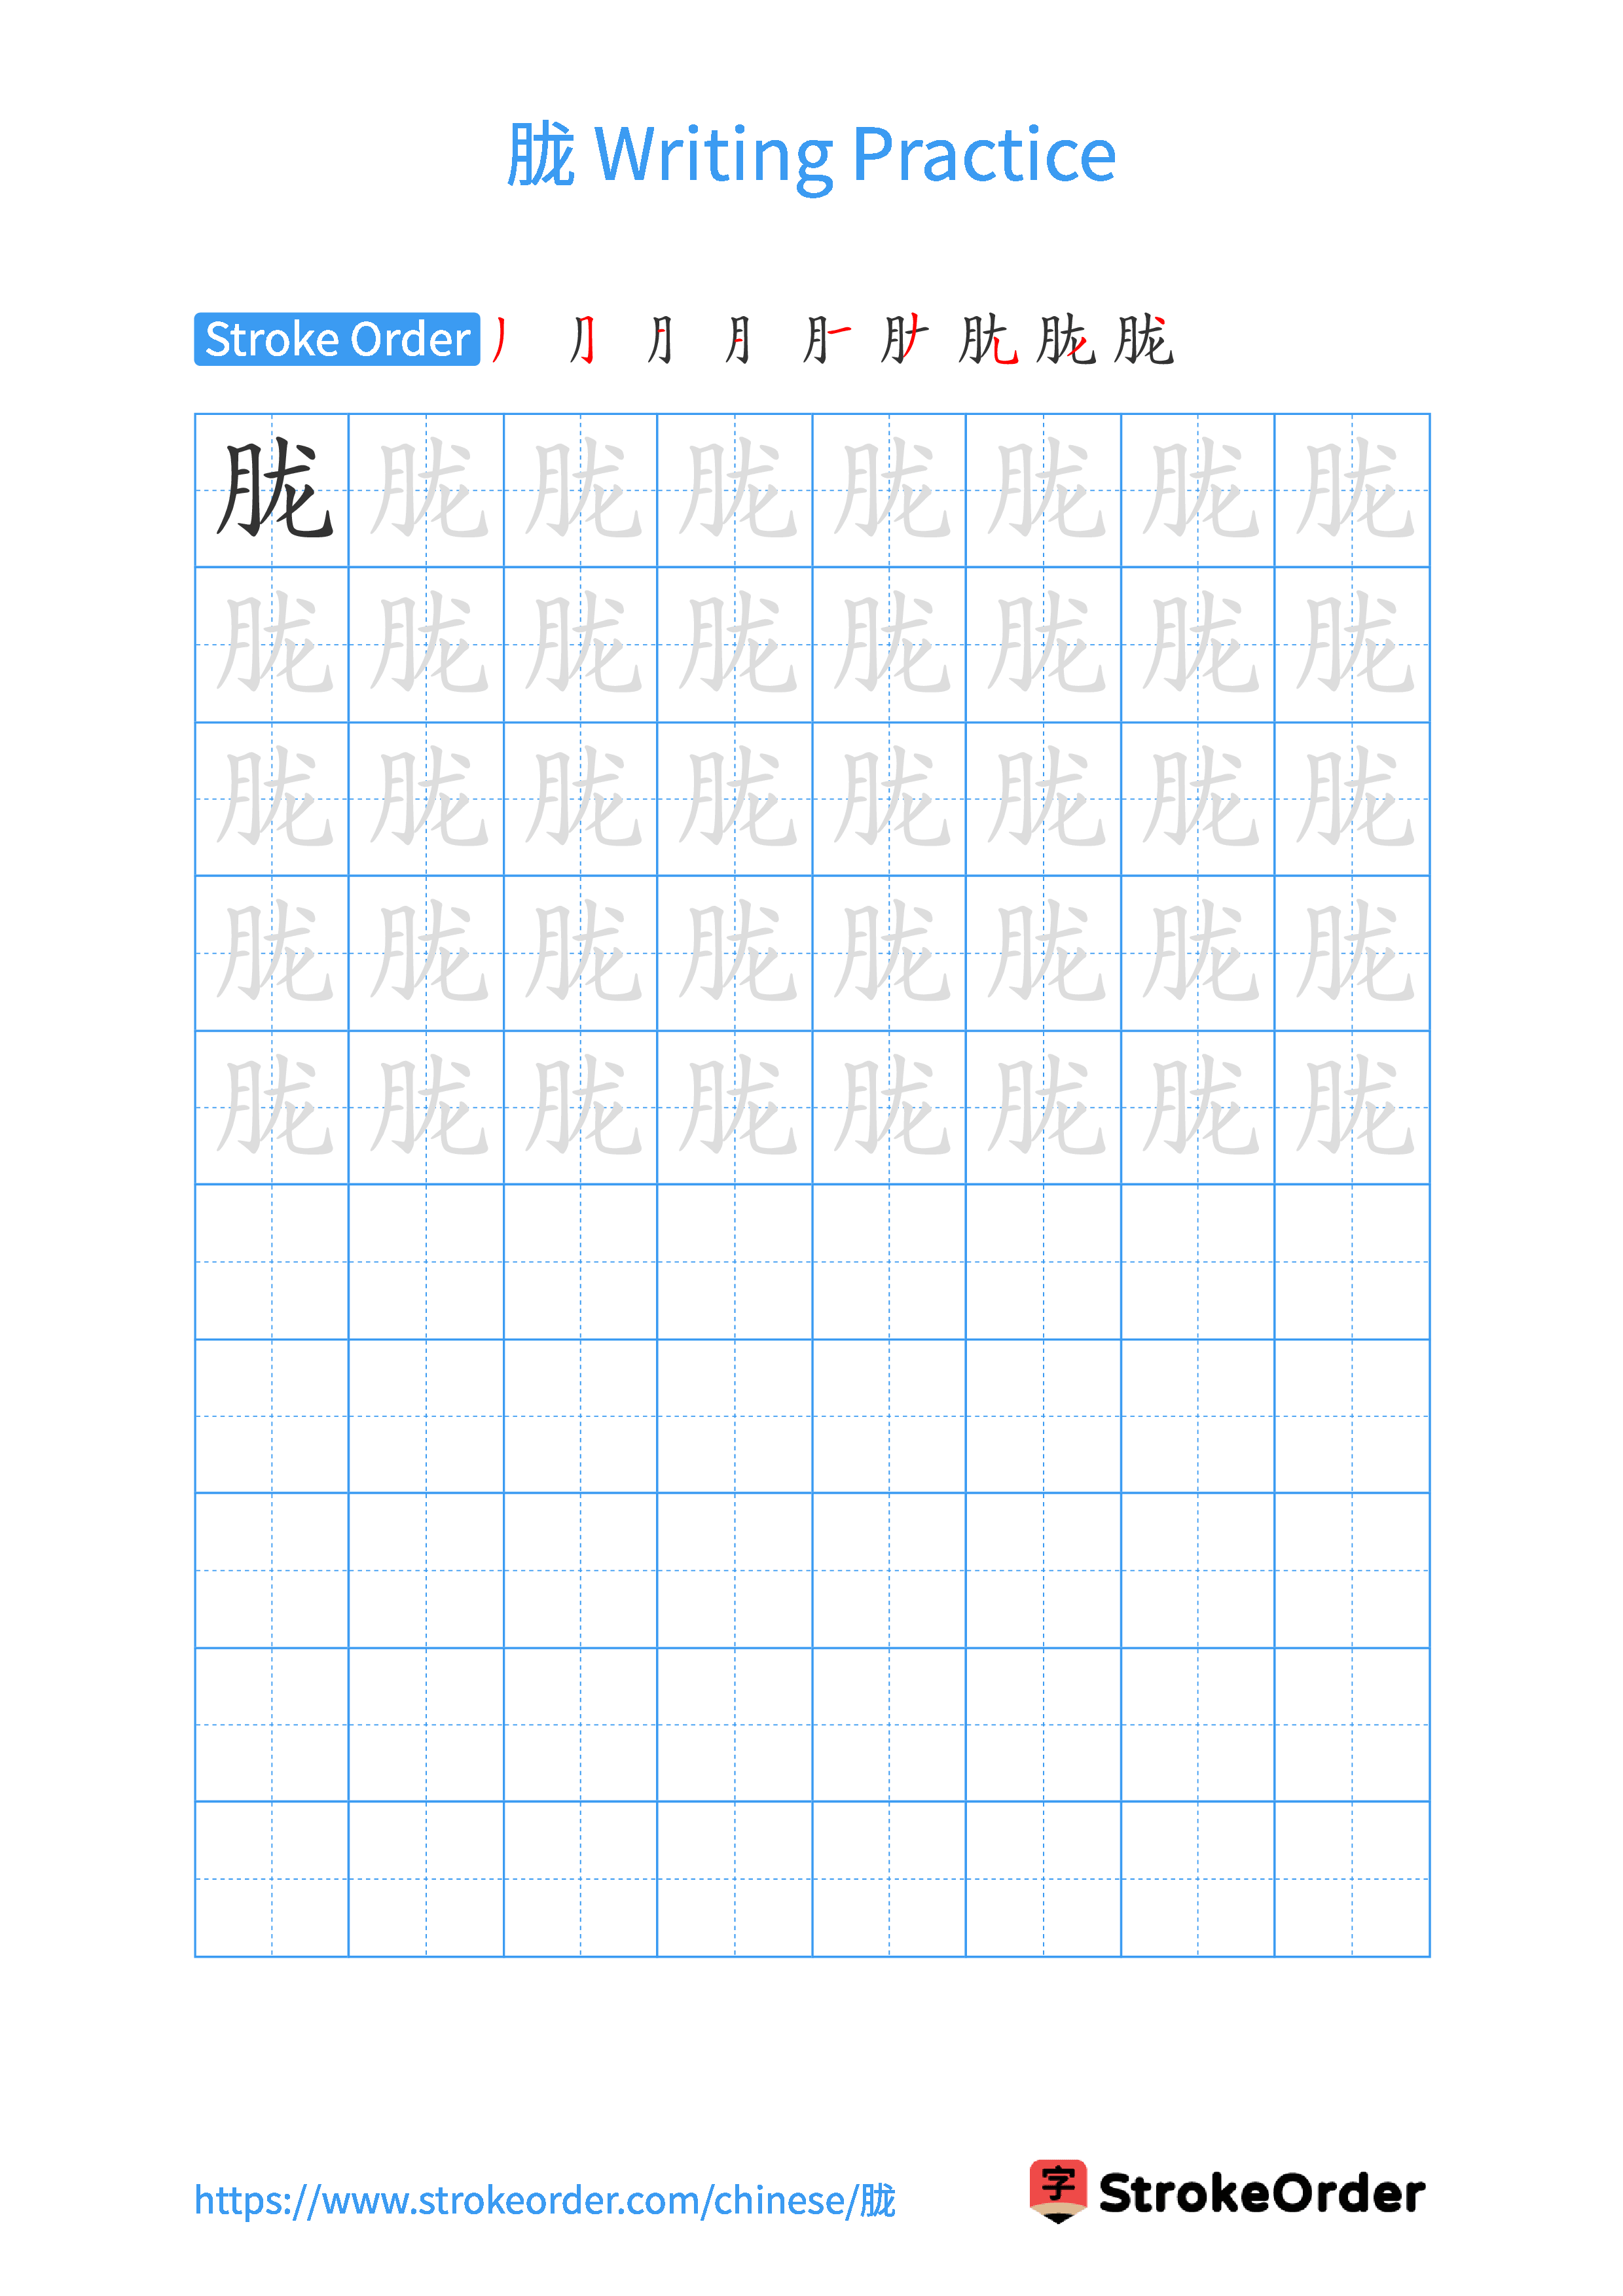 Printable Handwriting Practice Worksheet of the Chinese character 胧 in Portrait Orientation (Tian Zi Ge)